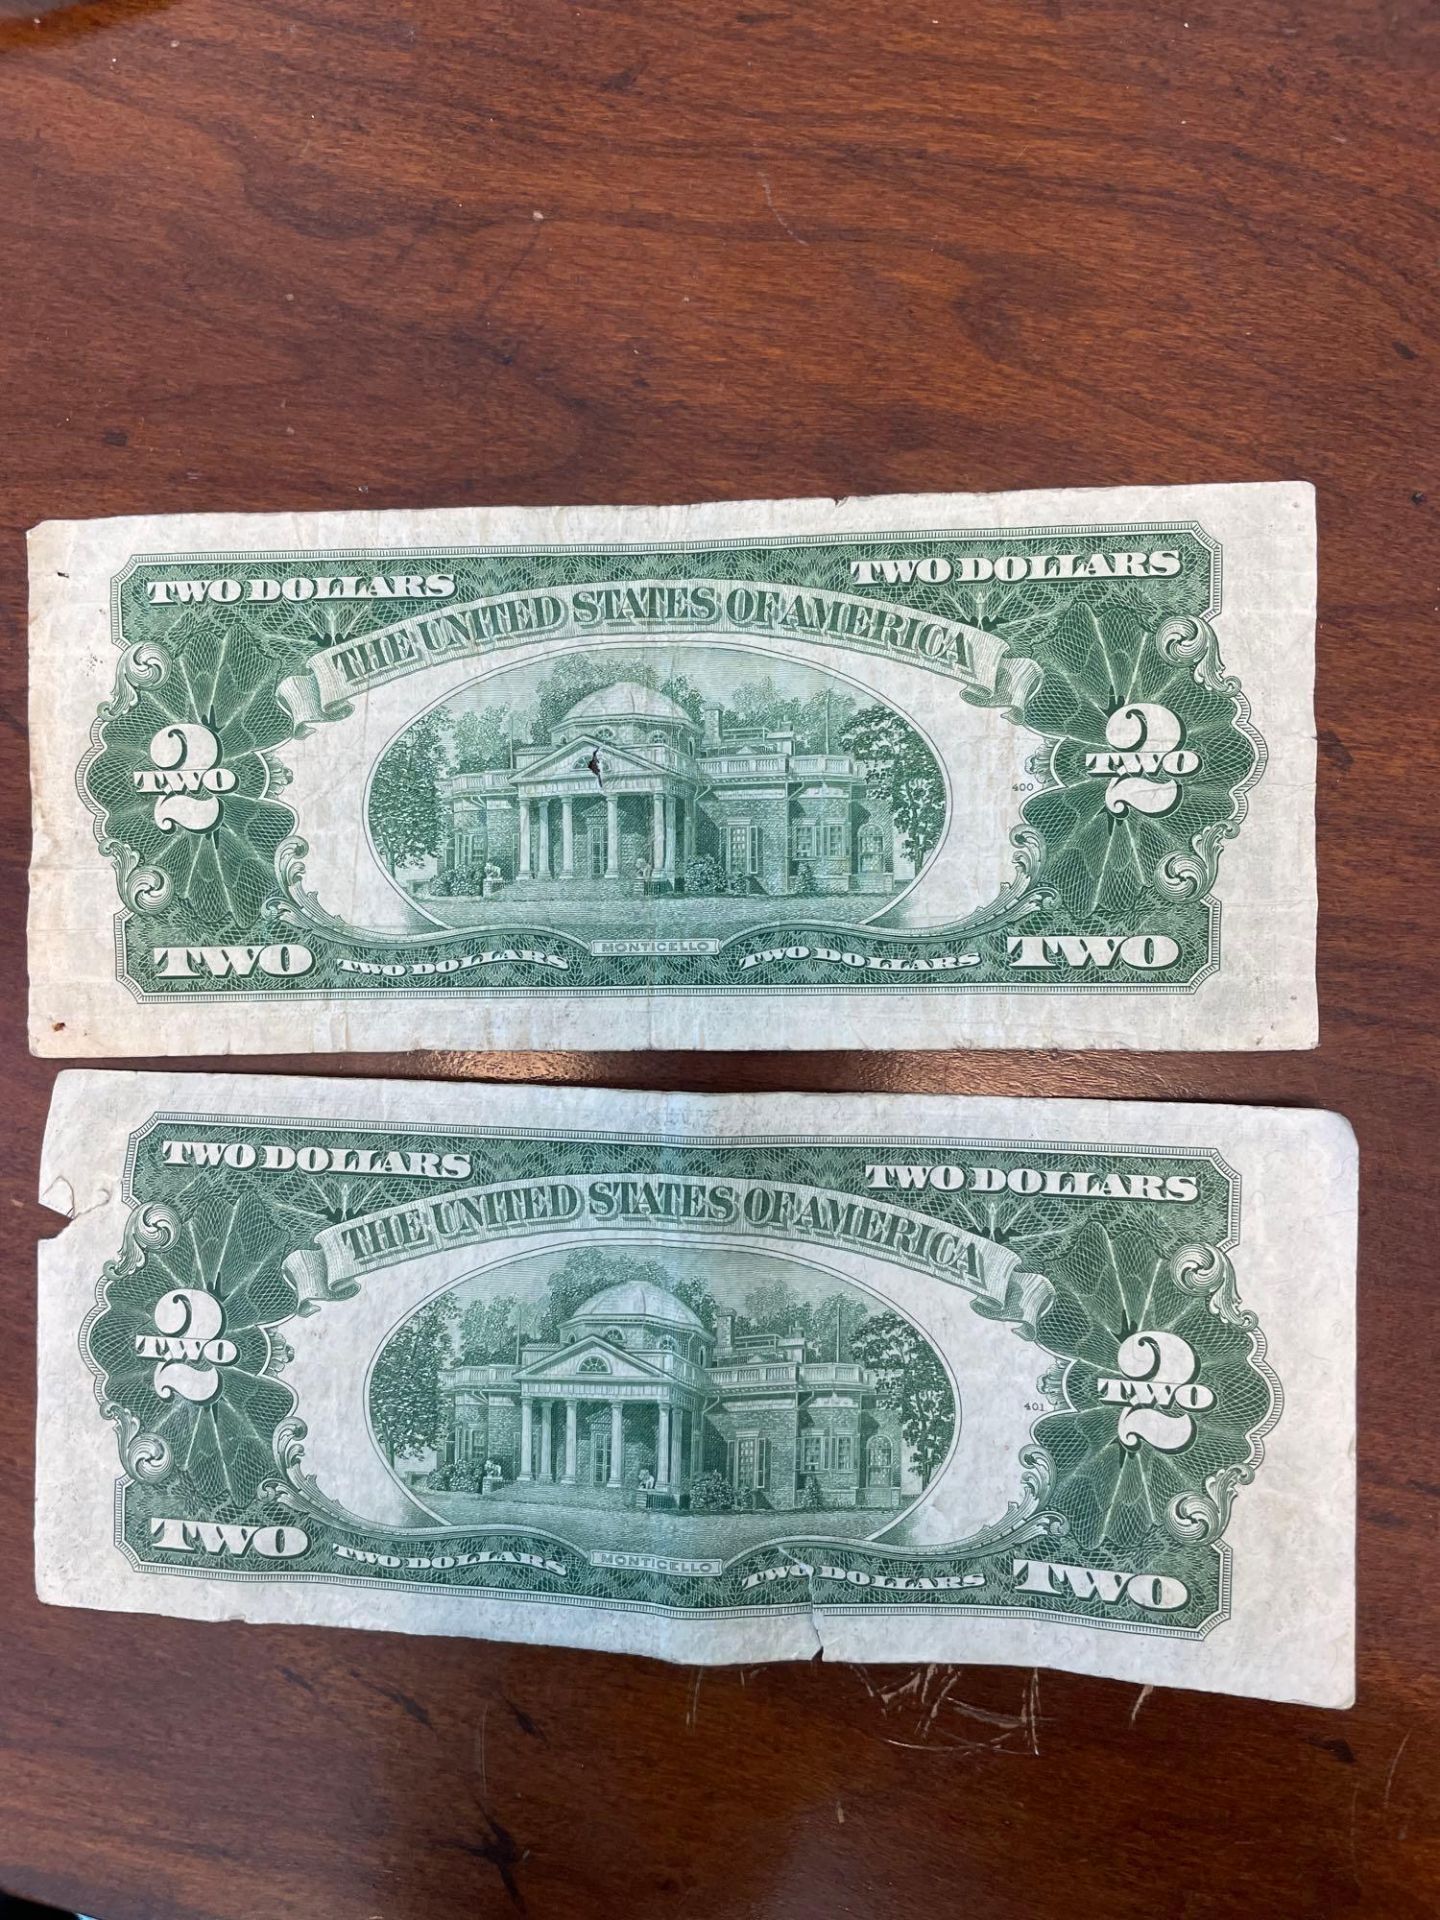 2 1953 Red Seal 2 Dollar Bills - Image 3 of 3